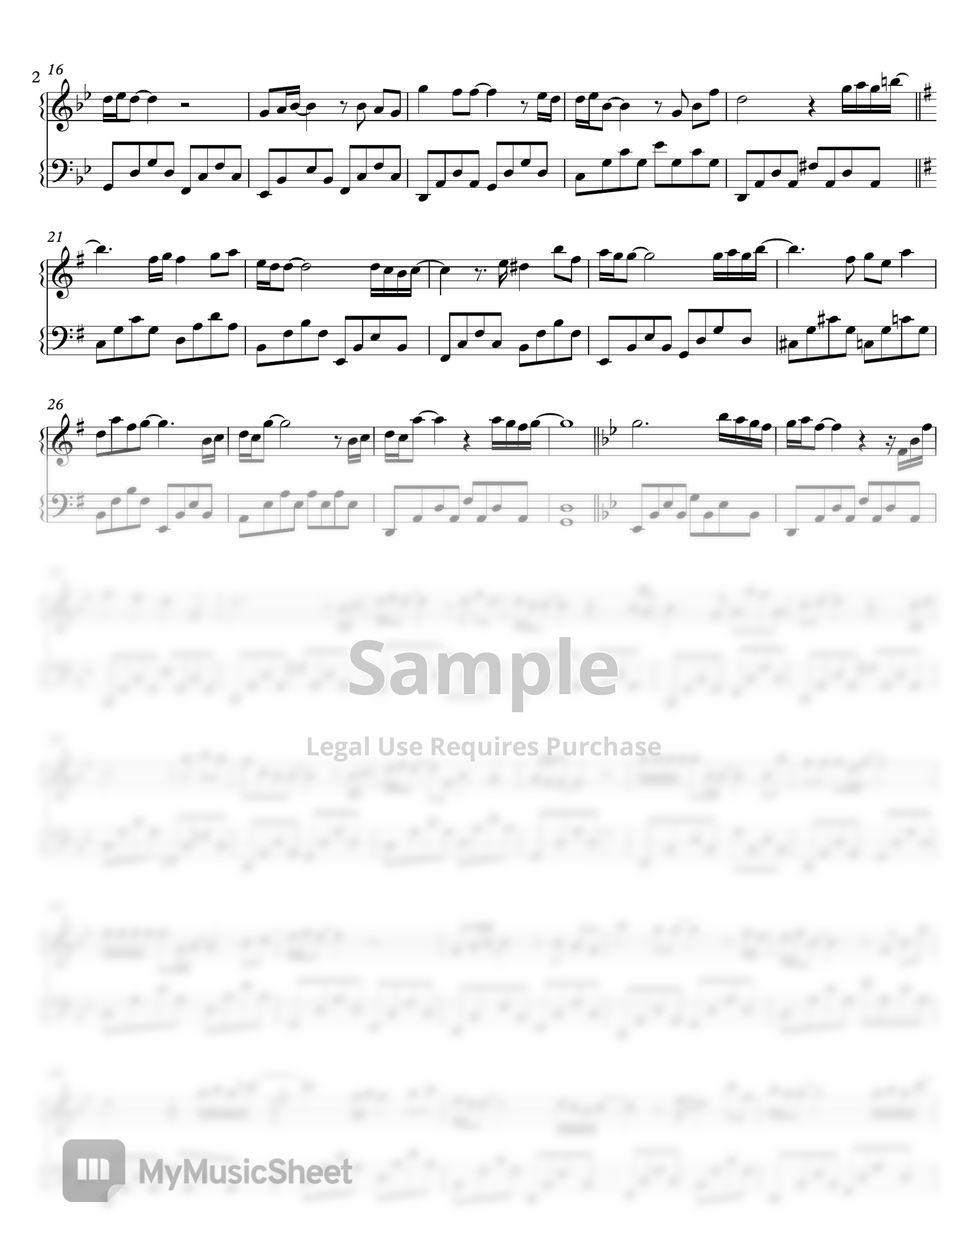 musiciscode Baka Mitai Sheet Music (Leadsheet) in Bb Major